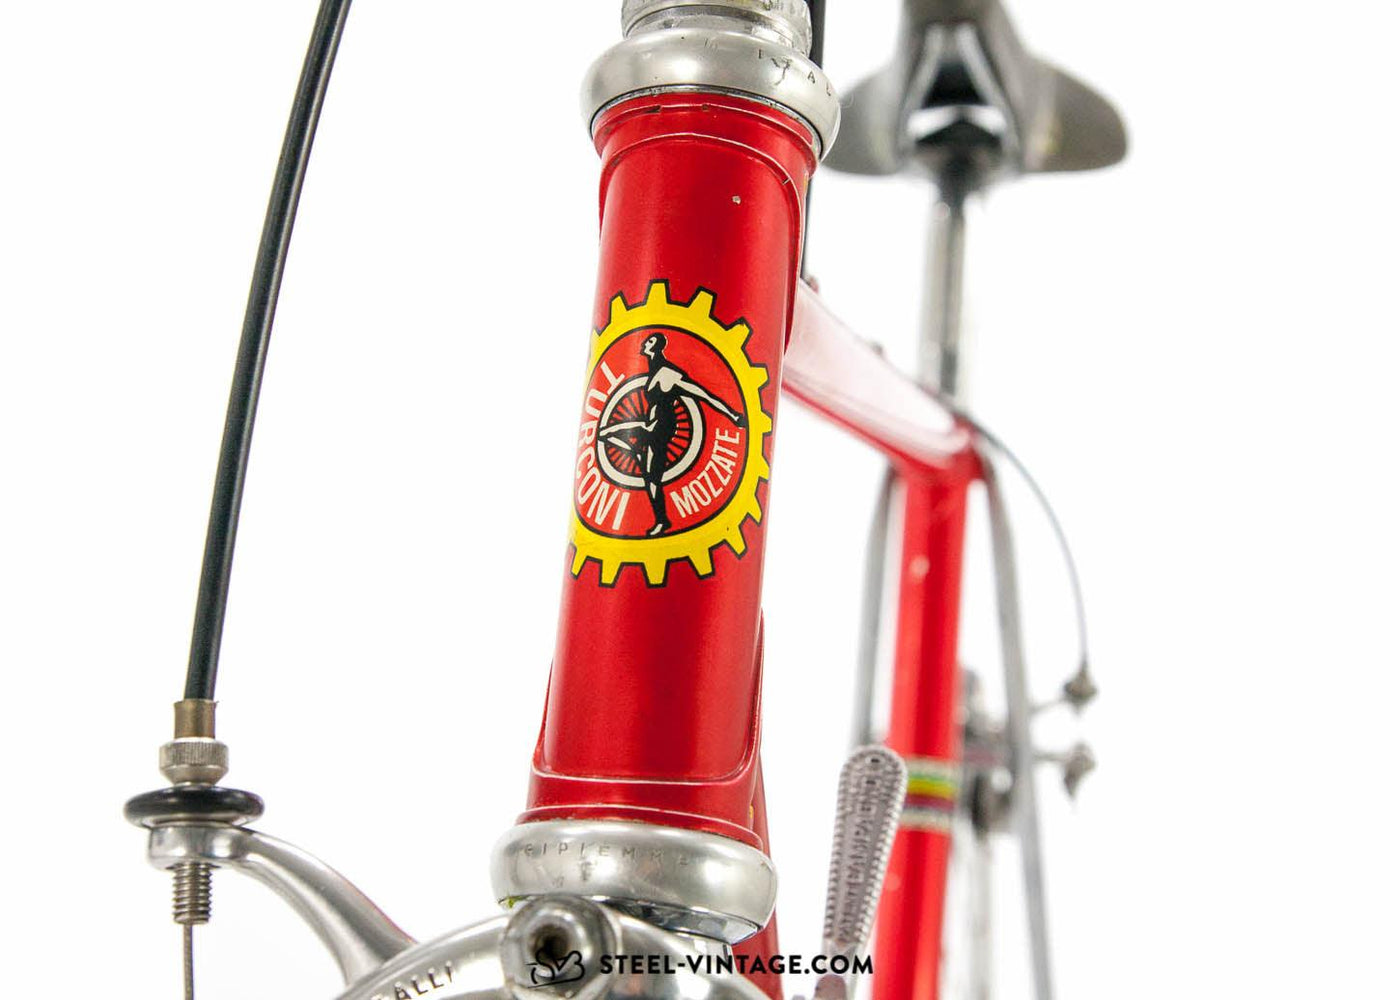 Turconi by Losa Classic Road Bike 1980s - Steel Vintage Bikes